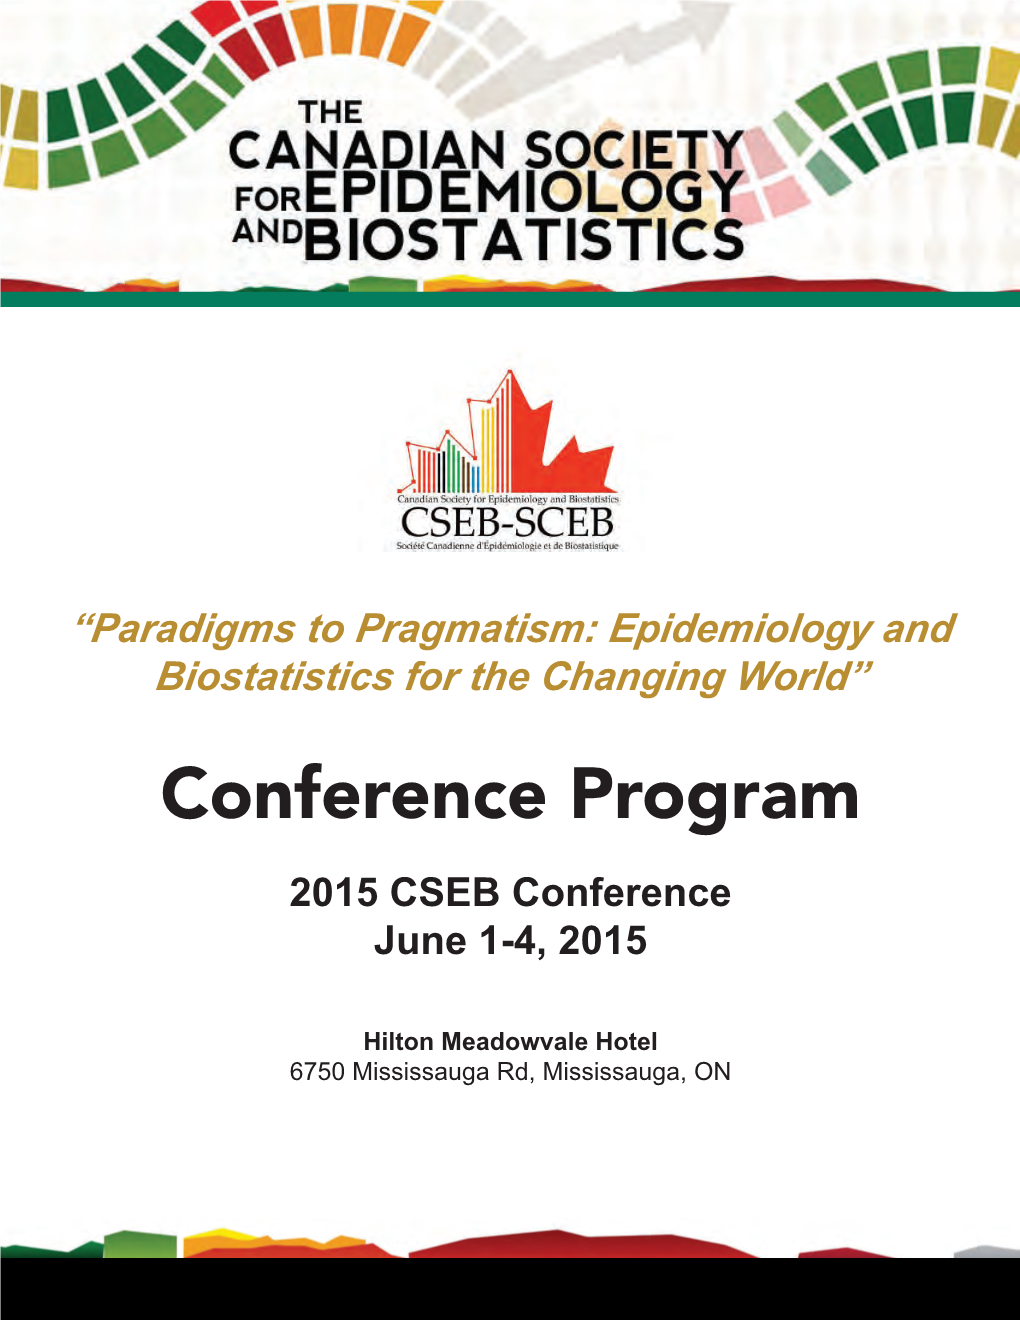 Conference Program 2015 CSEB Conference June 1-4, 2015